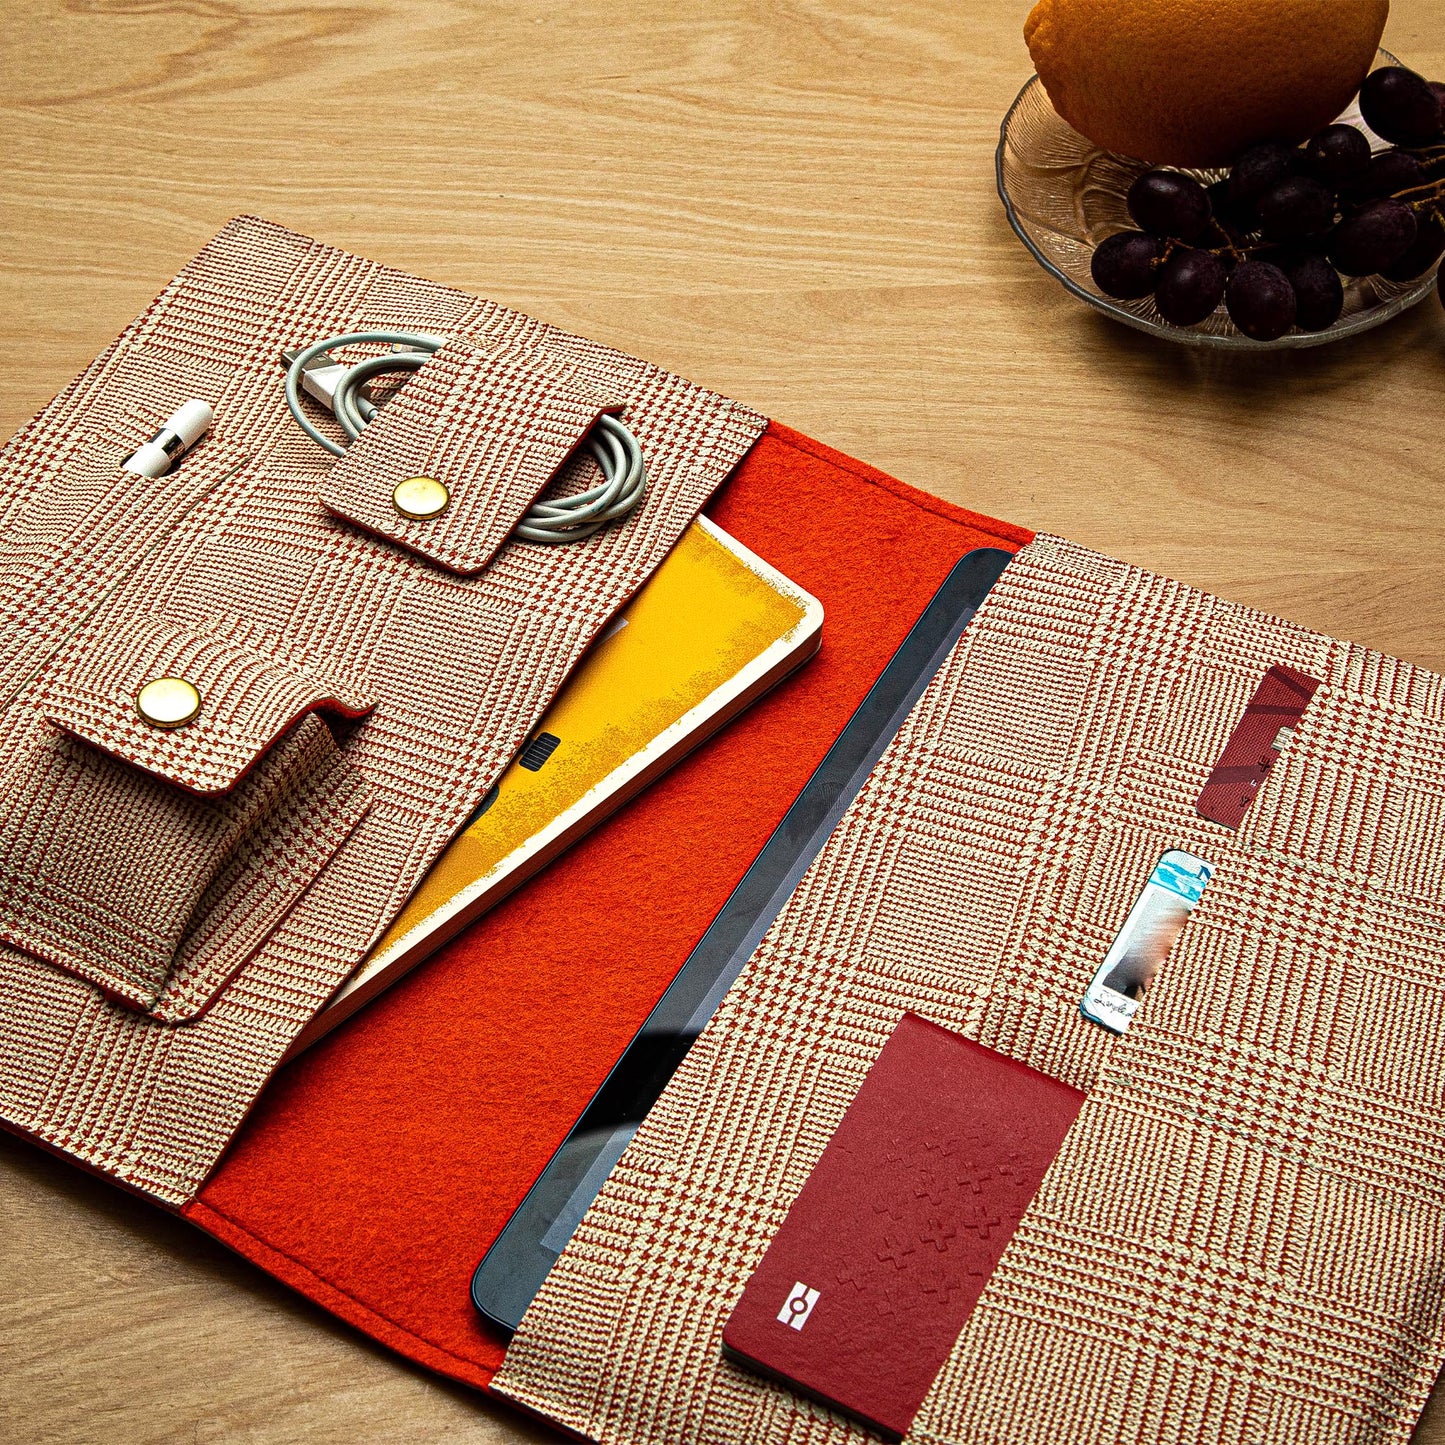 Handmade Folio Cover for iPad/Pro/Air - Cream and Orange Striped Faux Leather